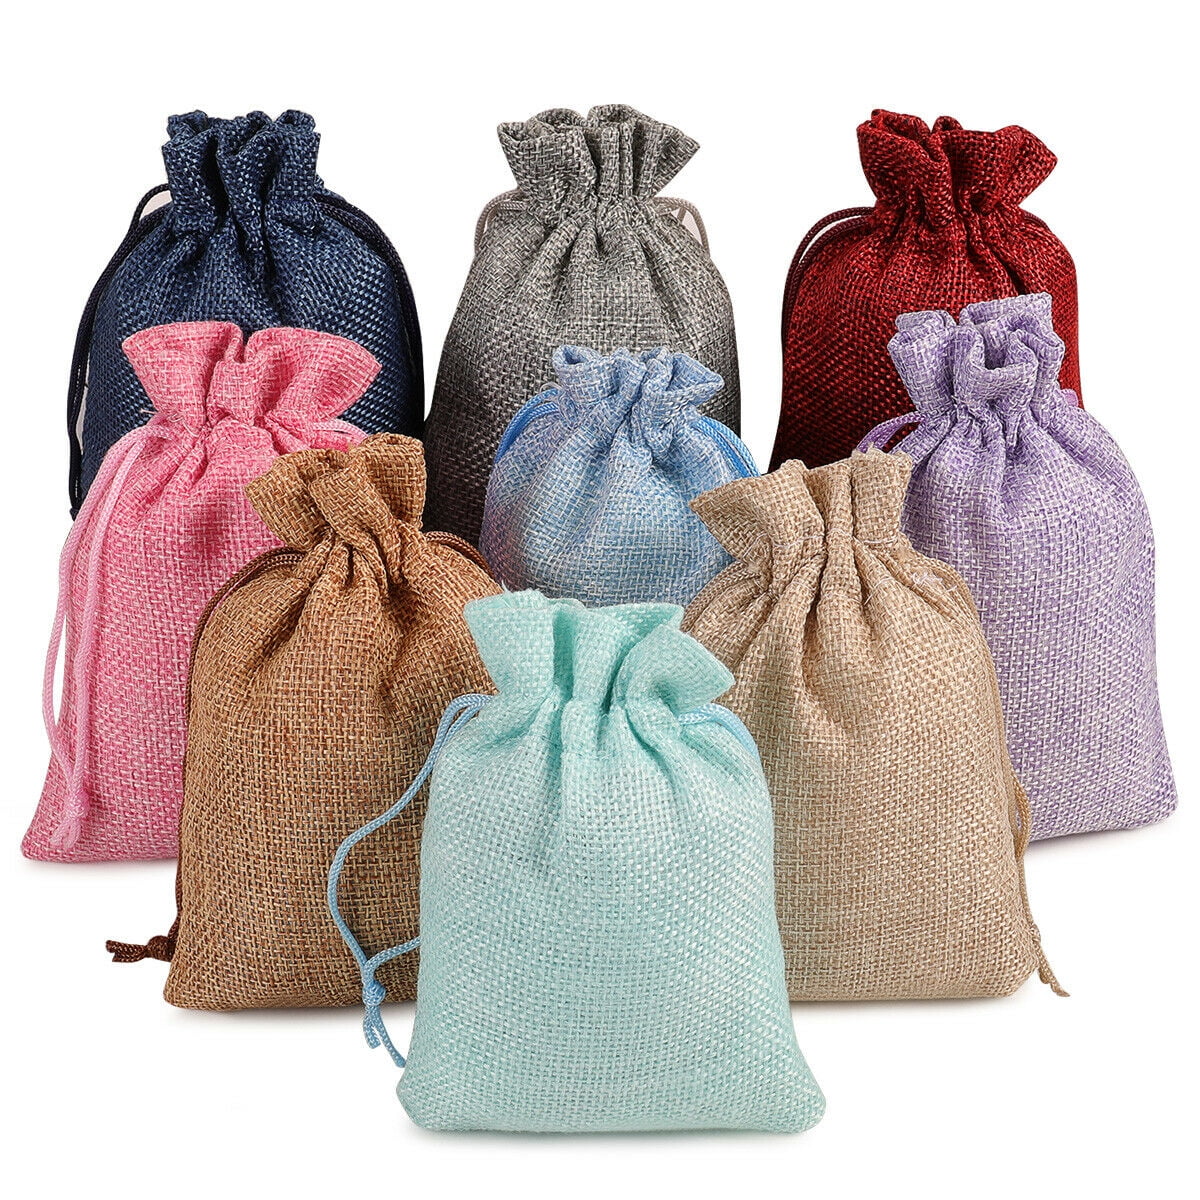 50pcs Wedding Burlap Jute Natural Linen Favour Candy Gift Bags Drawstring Pouch 